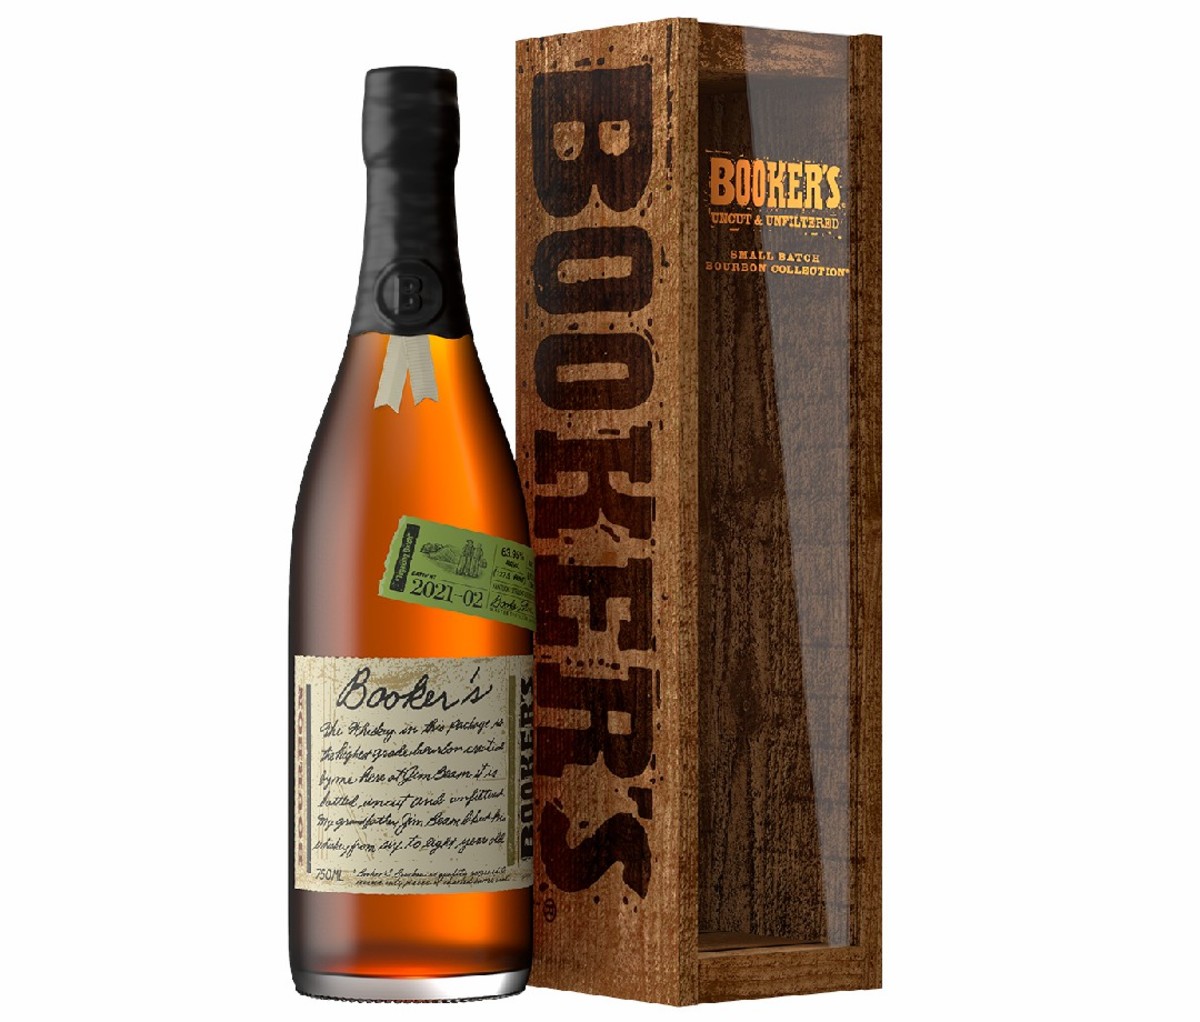 Booker's bourbon